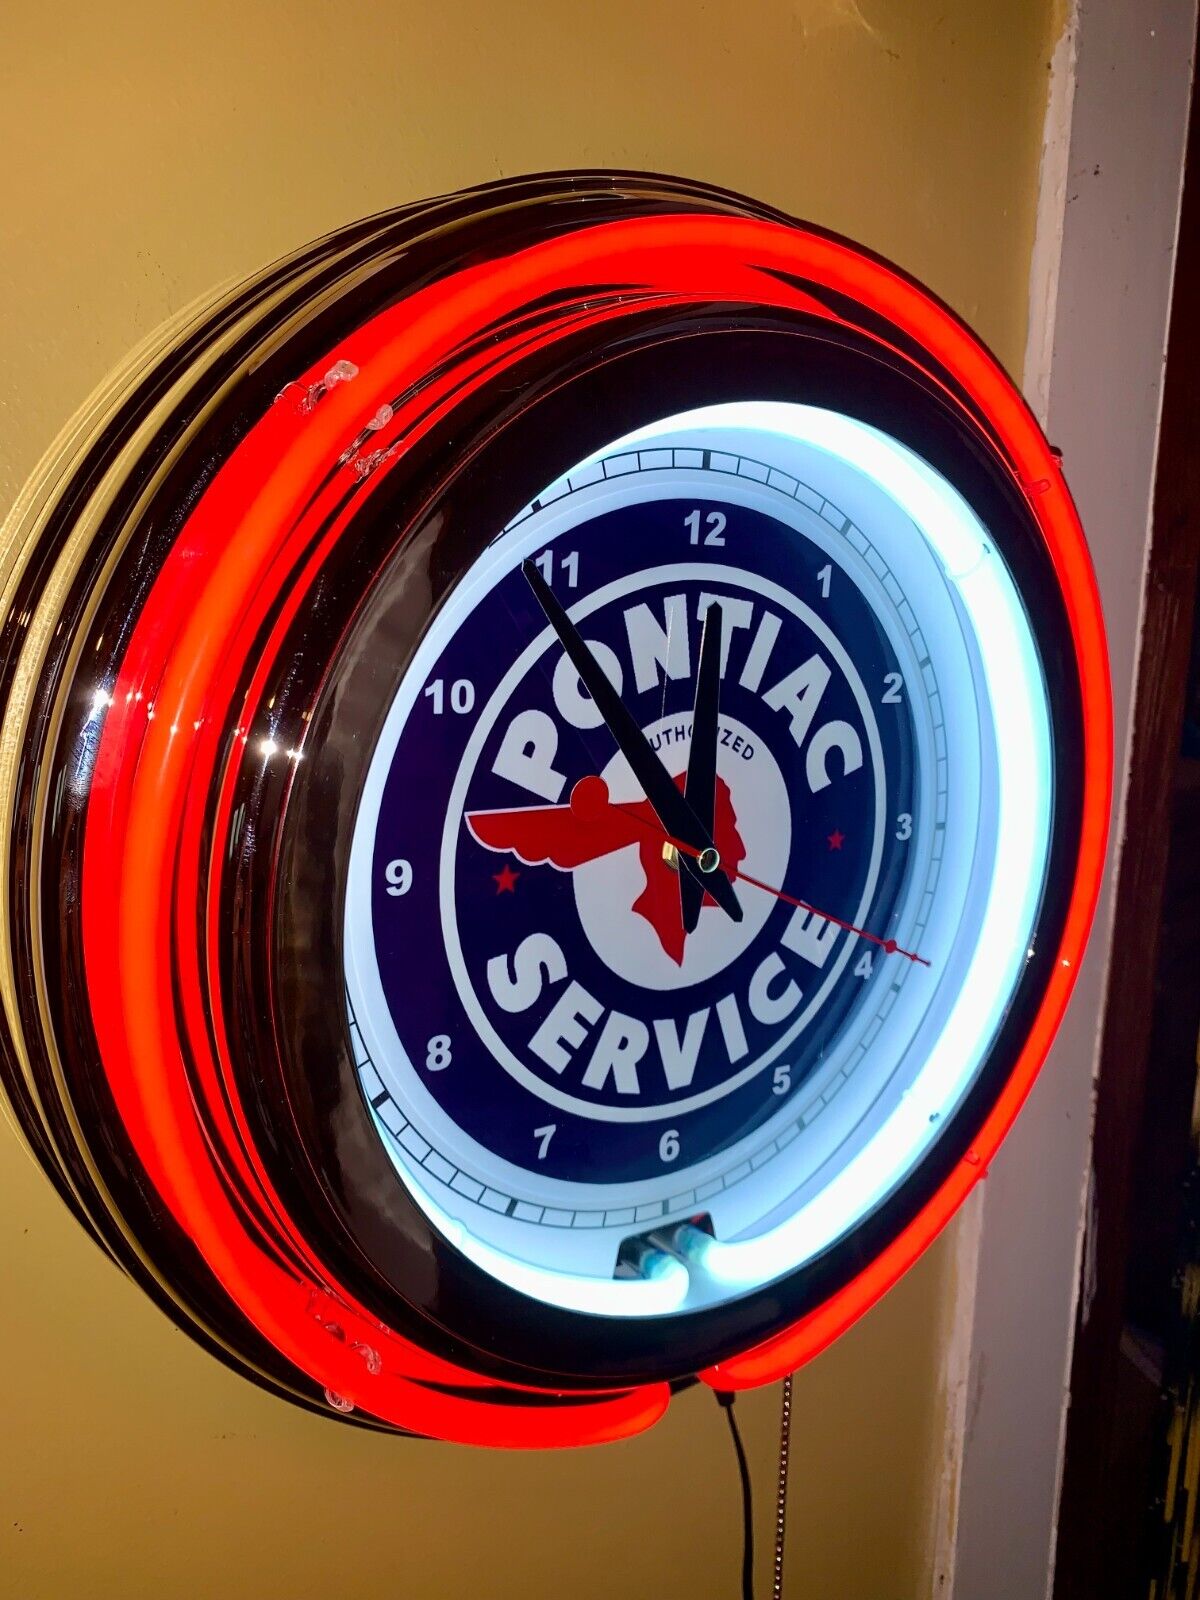 Pontiac Service Motors Auto Man Cave RED Neon Wall Clock Advertising Sign